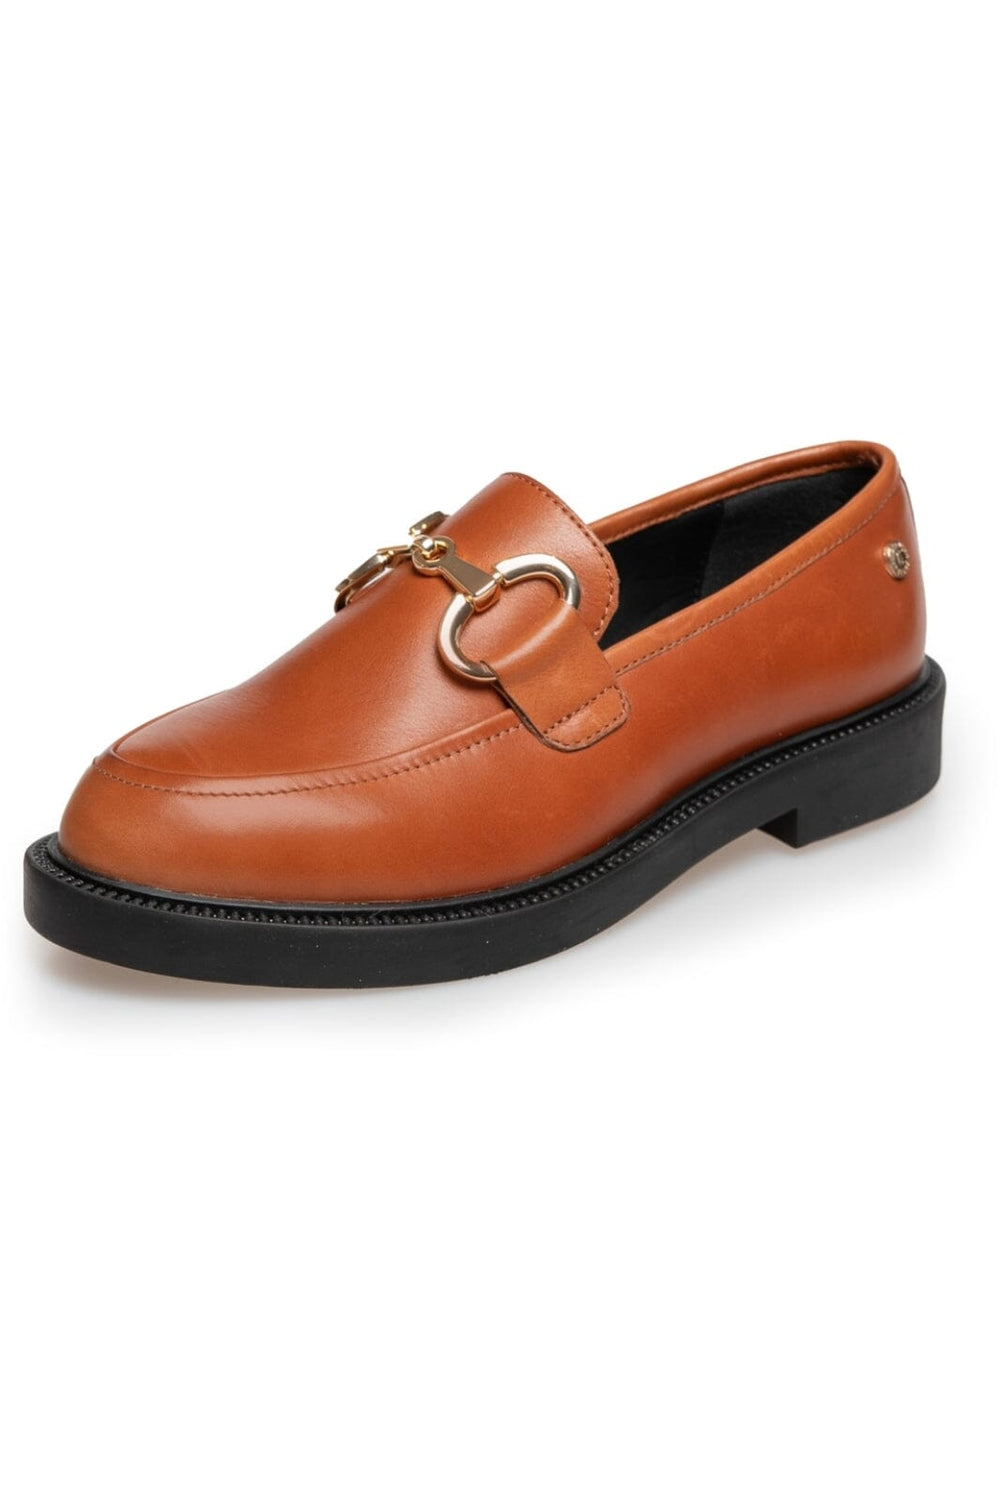 Copenhagen Shoes - Awake - 0241 Cognac Loafers 